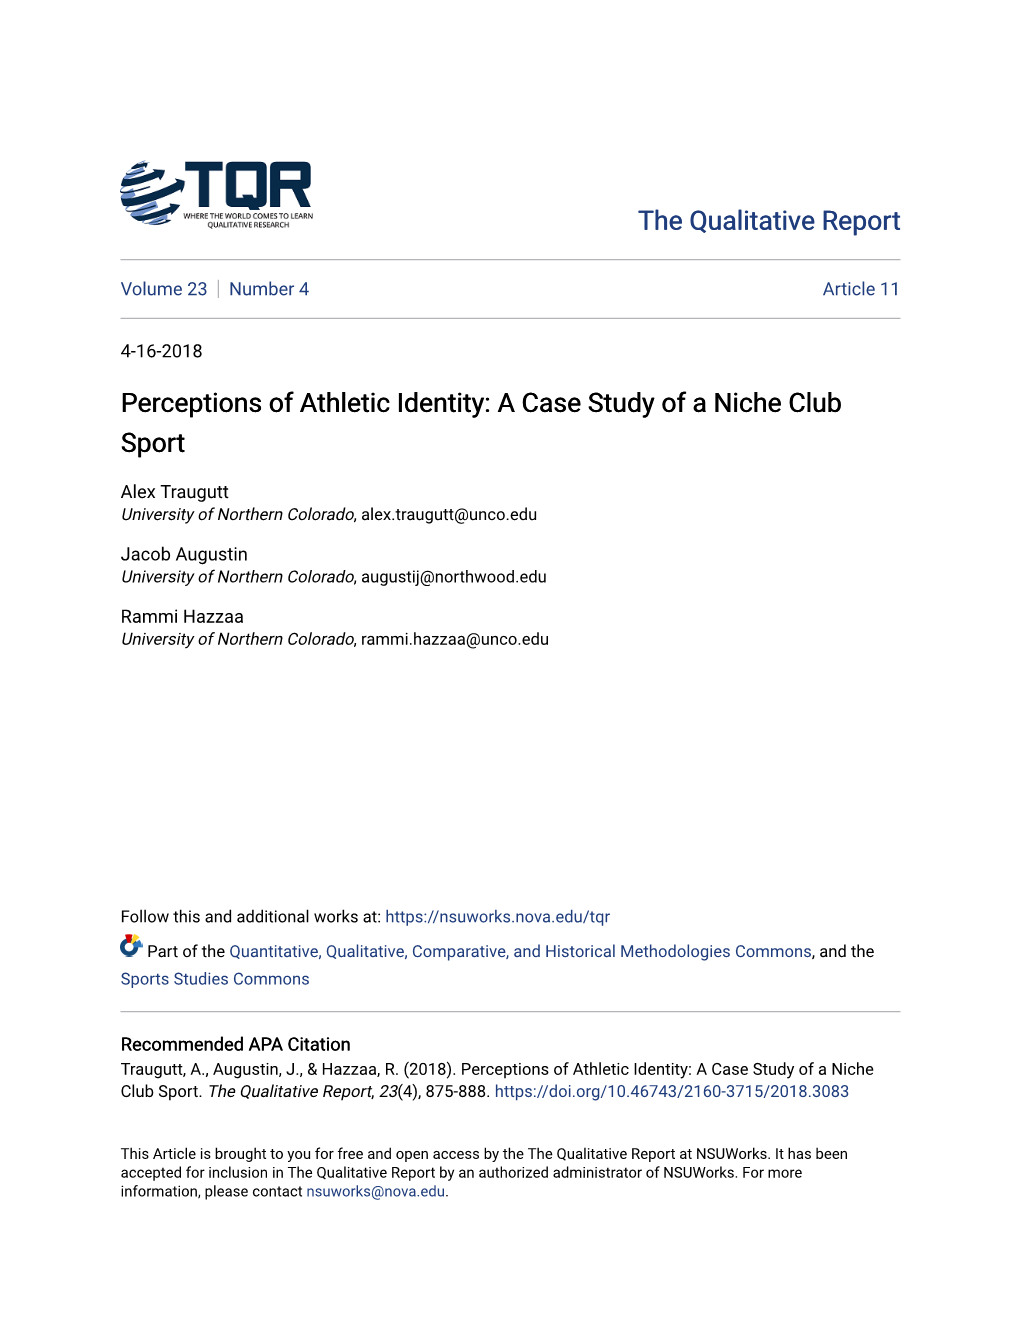 Perceptions of Athletic Identity: a Case Study of a Niche Club Sport